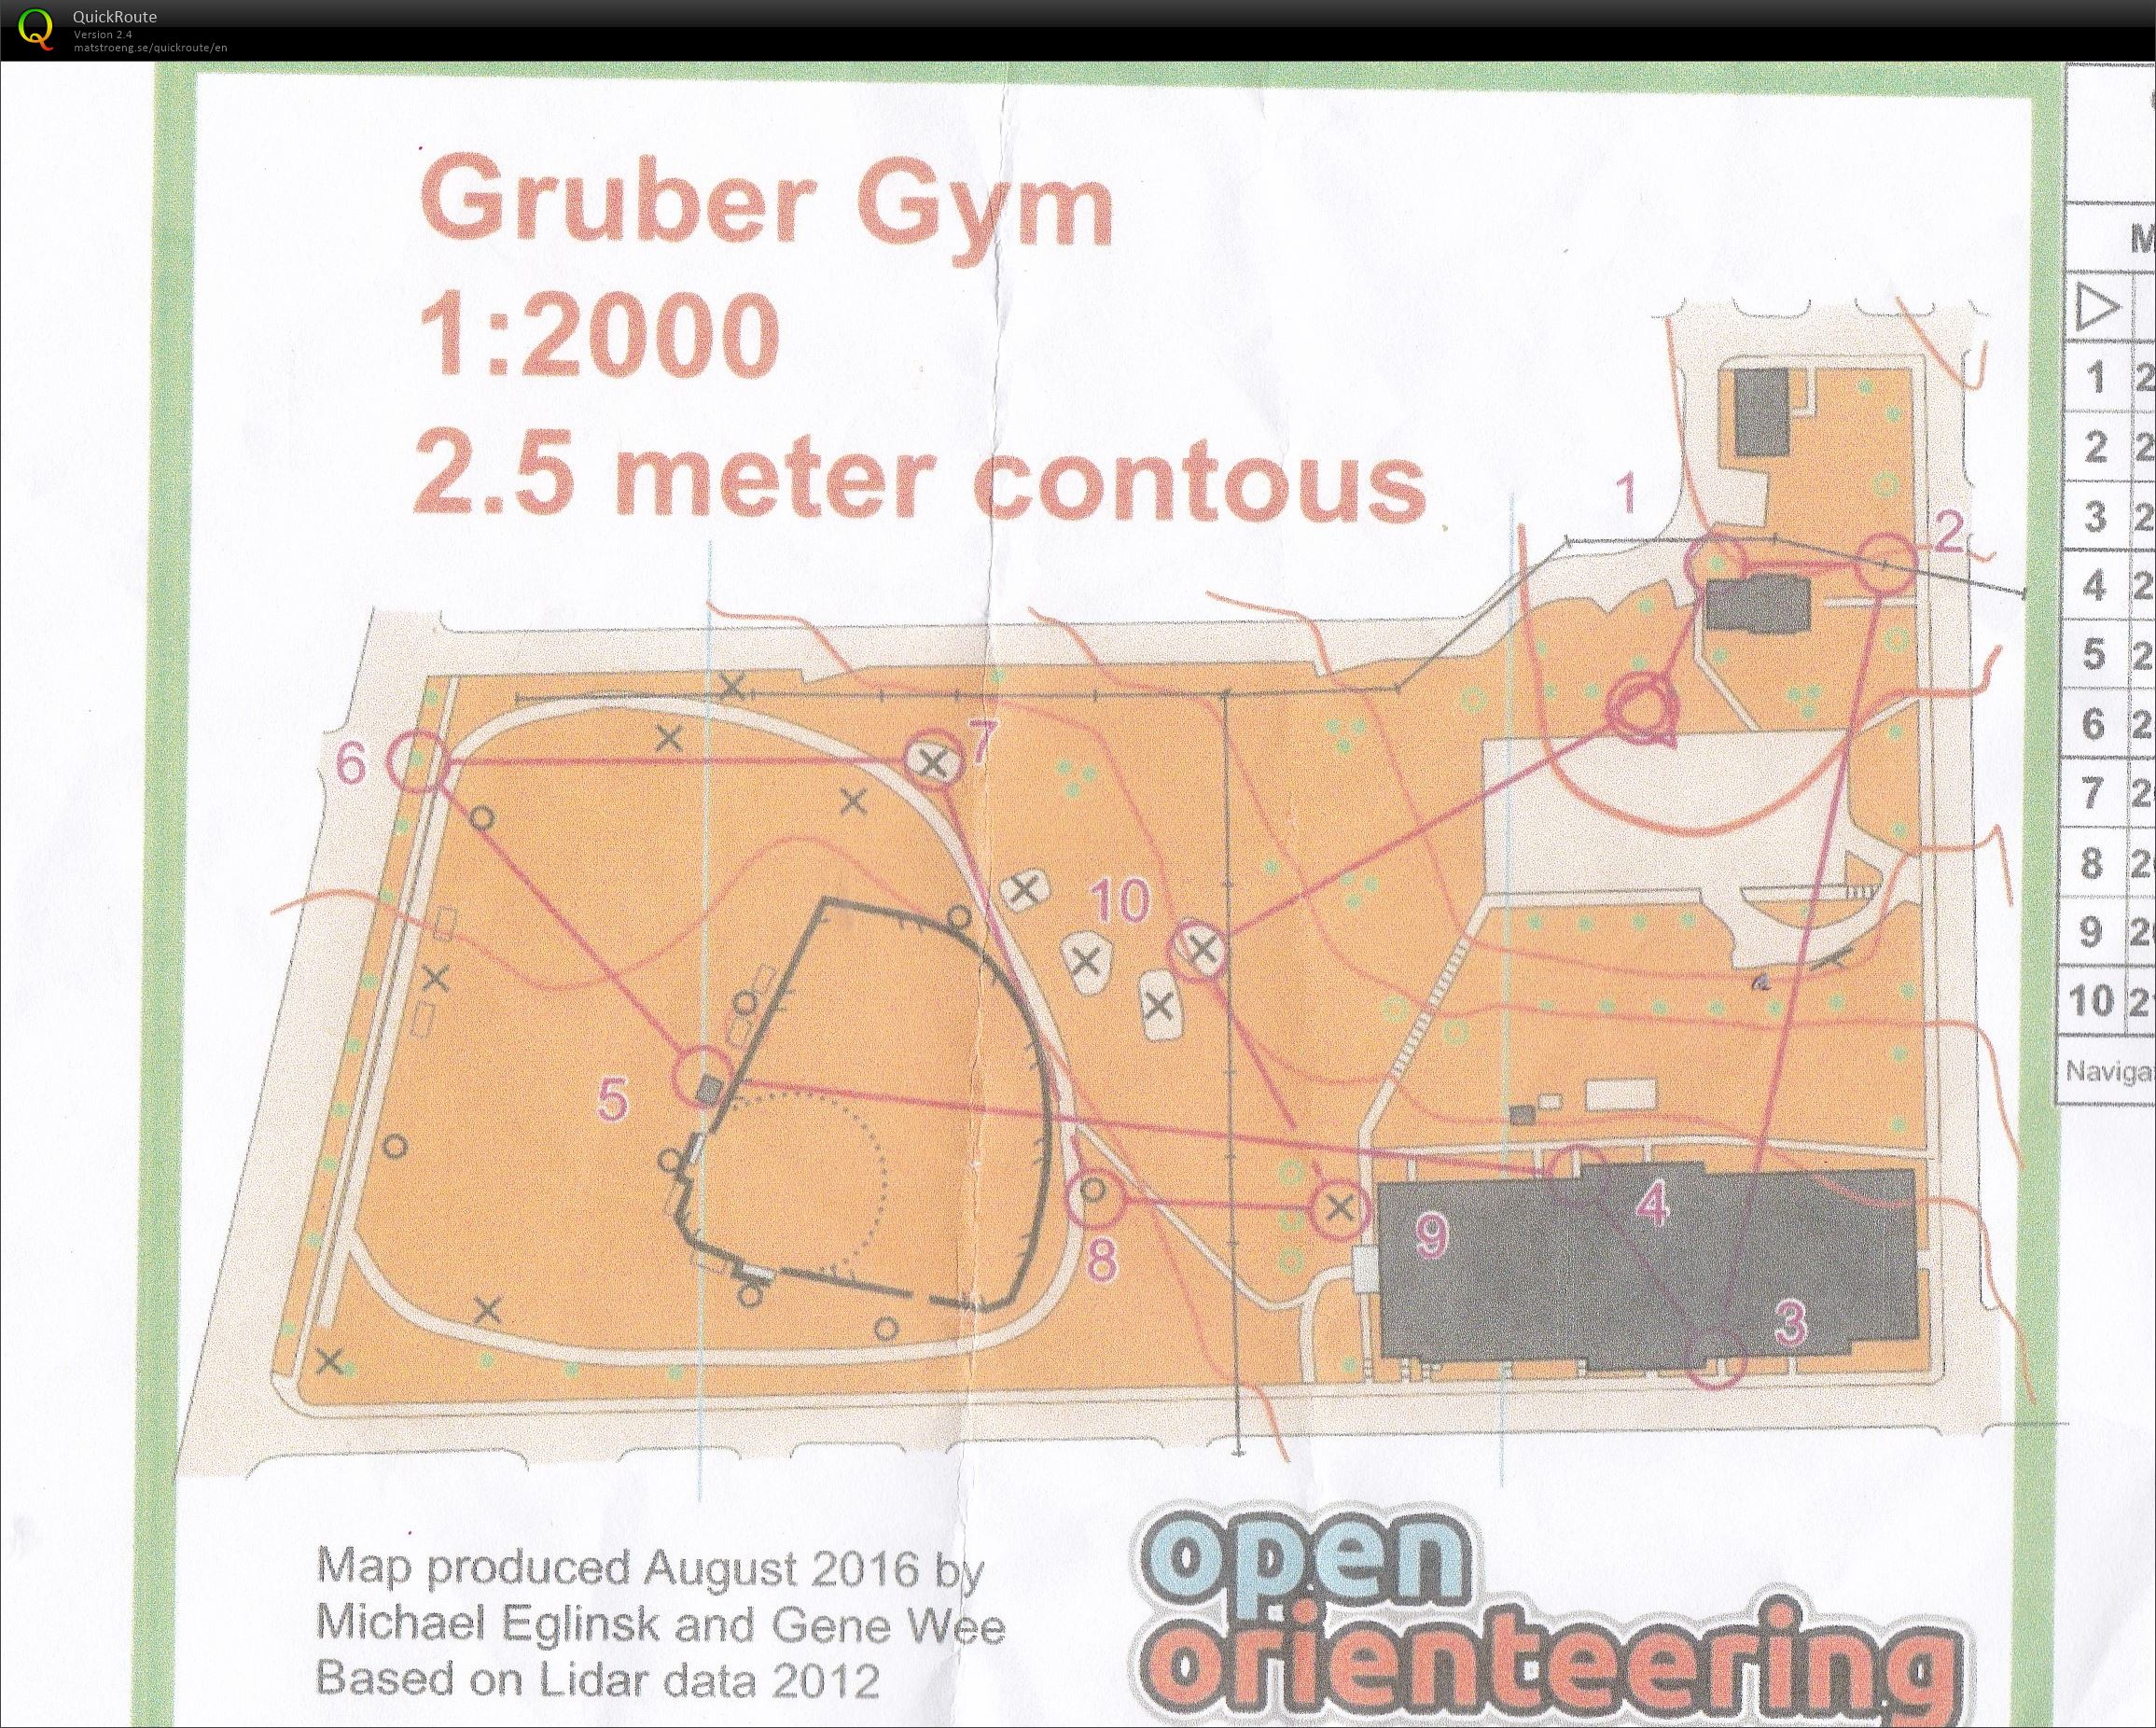 Gruber Gym Mini course (28.10.2017)